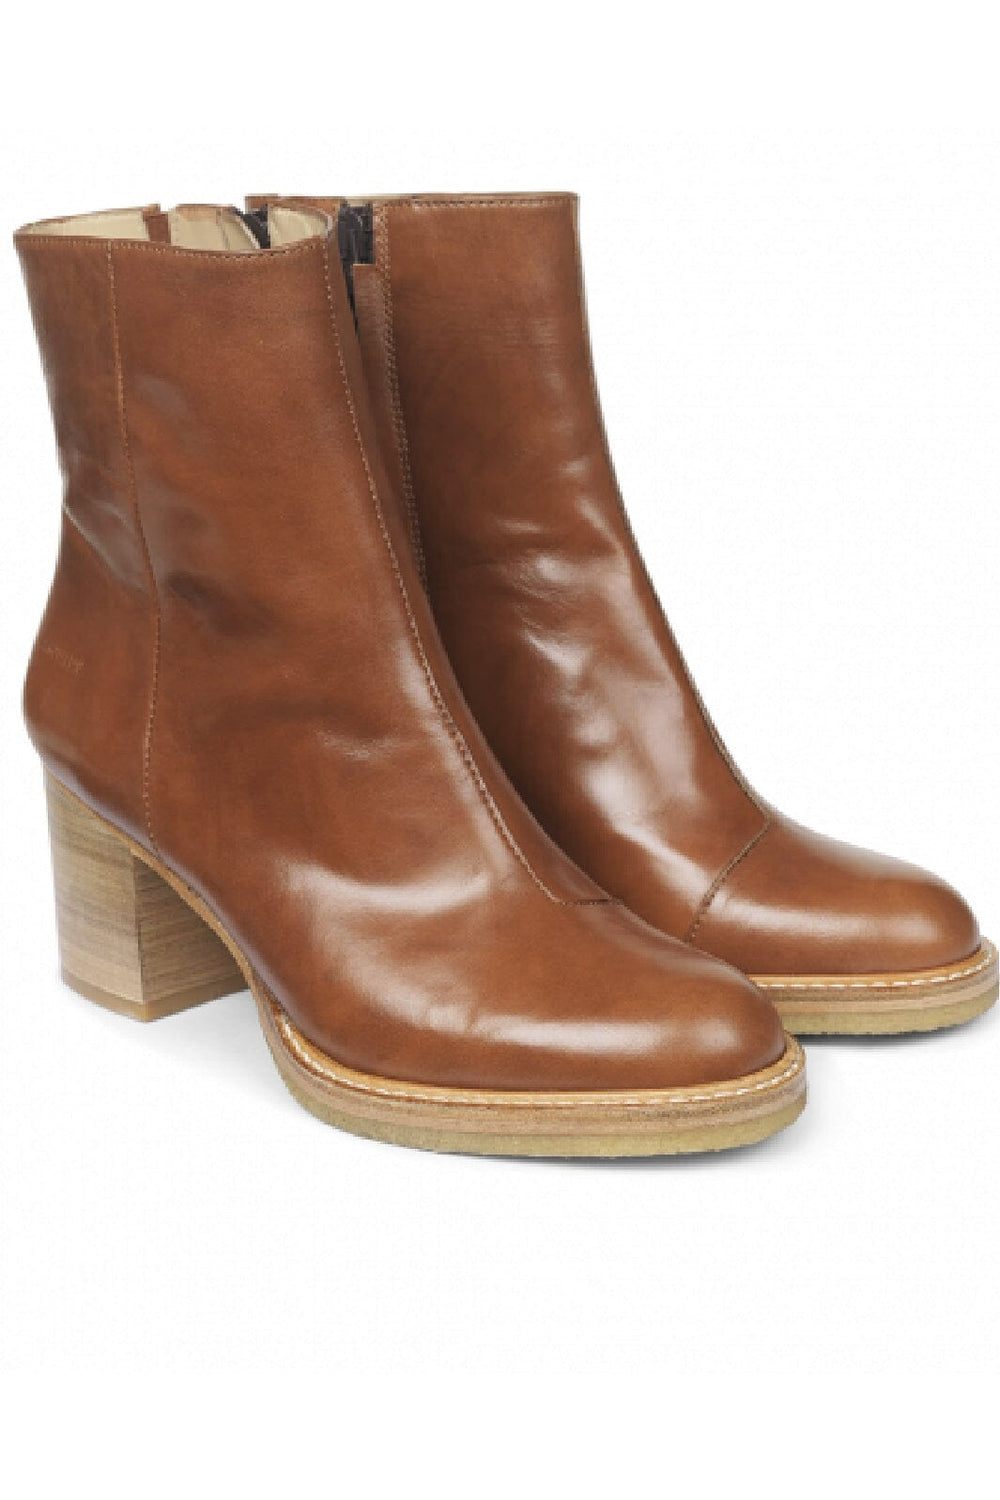 Angulus - Block heel boot with zipper - 8691 Støvletter 